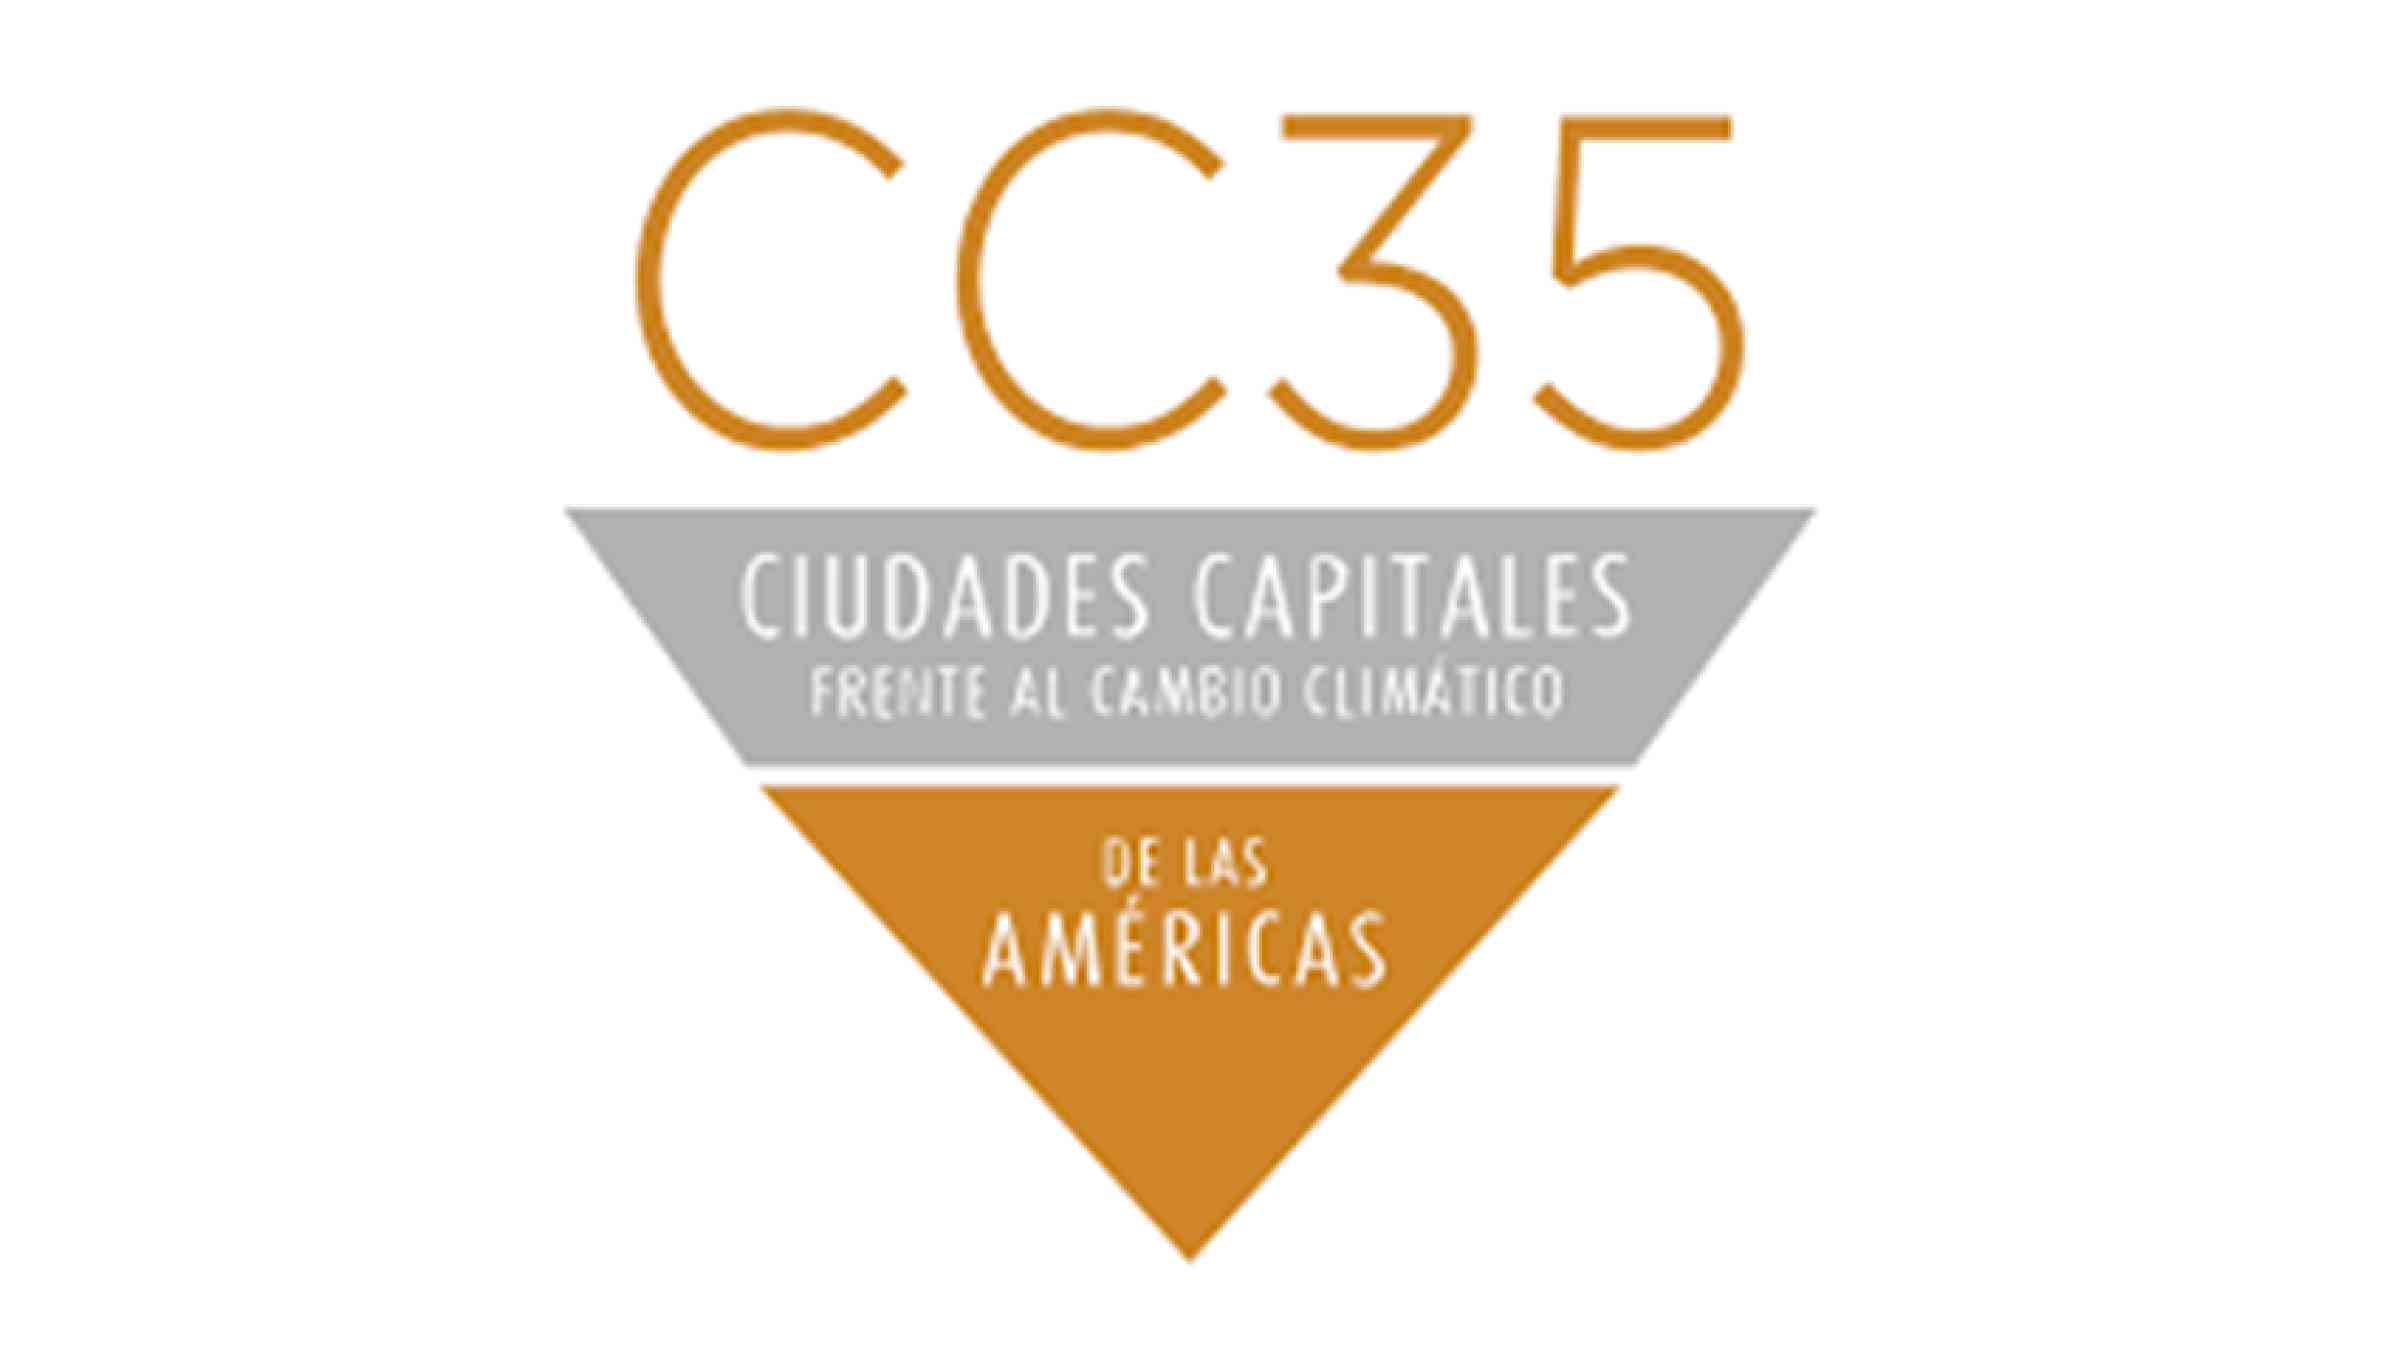 cc35